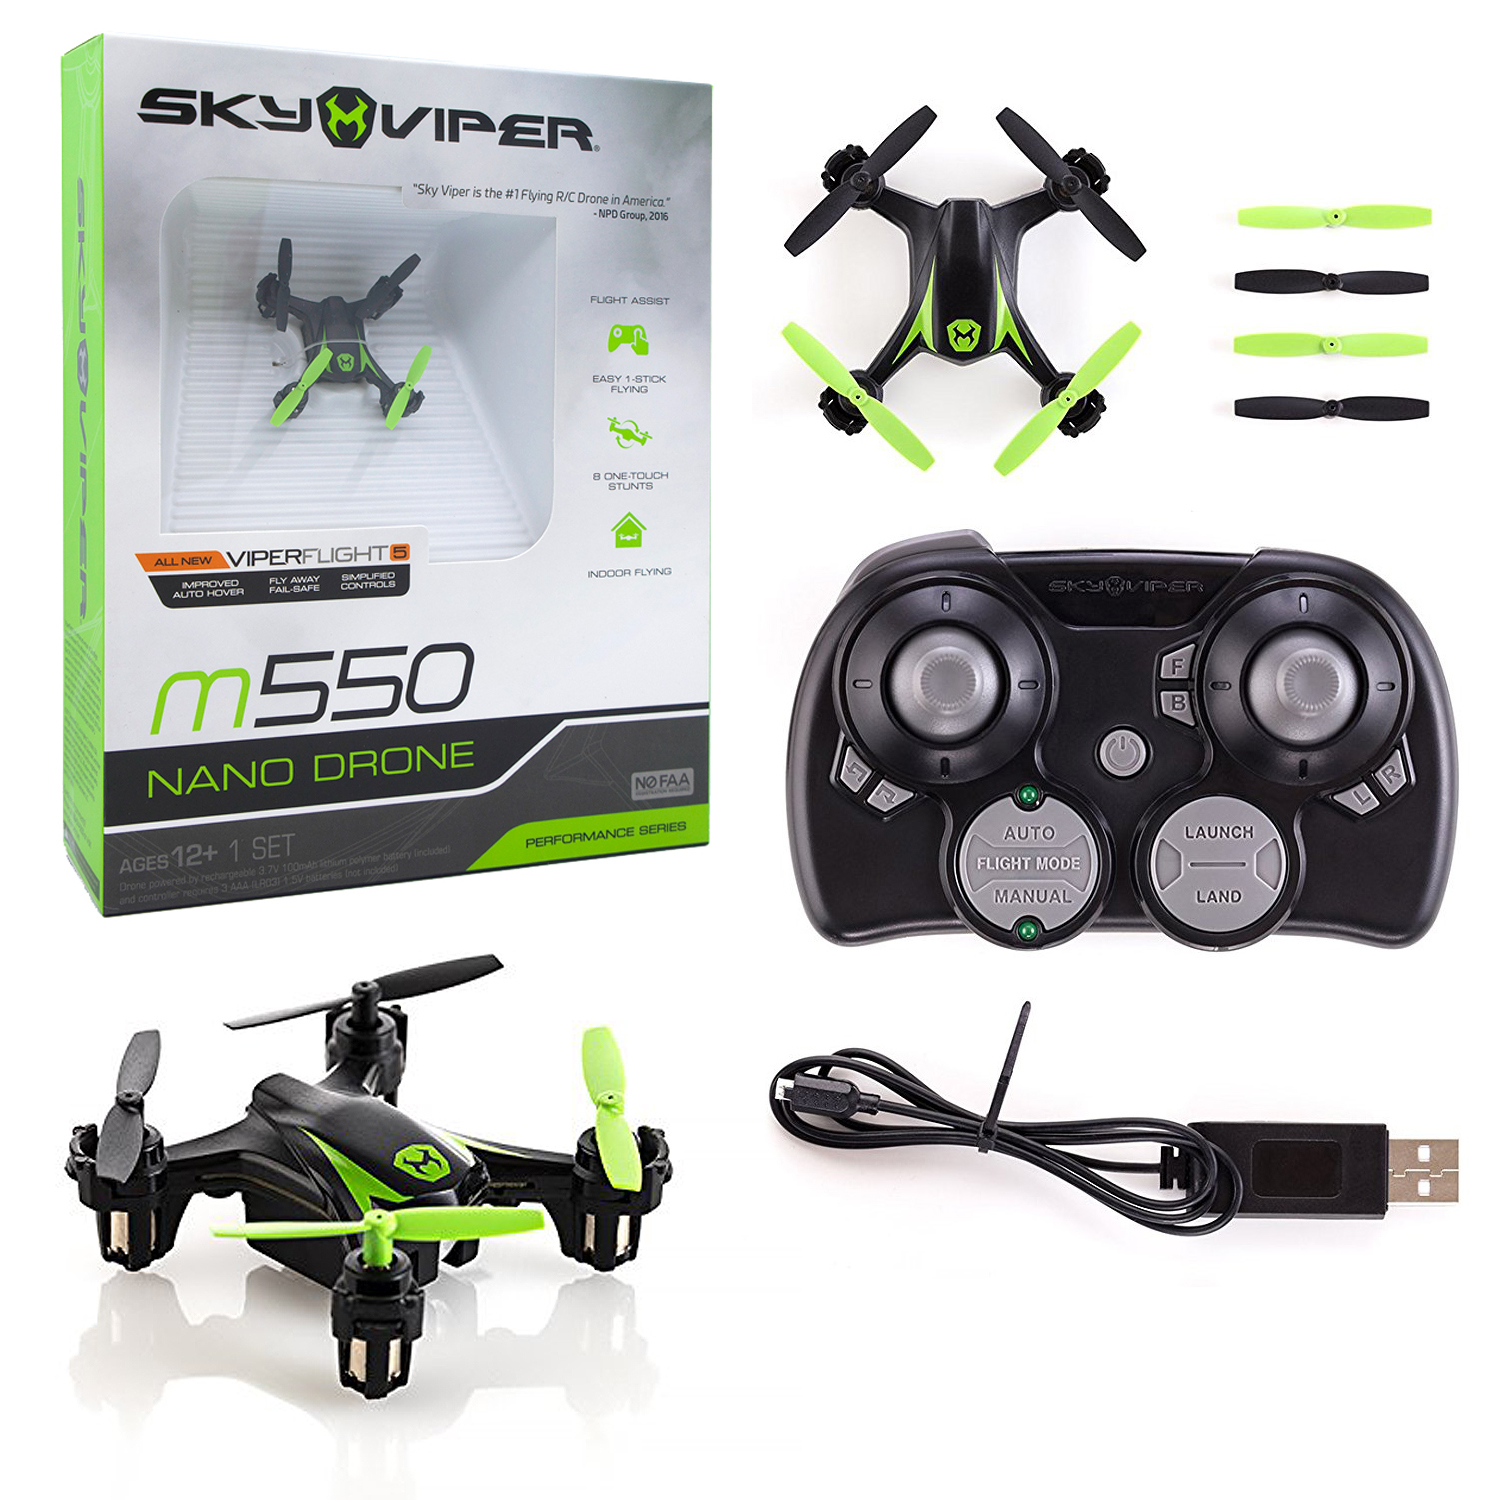 sky viper nano drone迷你特技翻遥控飞机M550掌上小型四轴飞行器